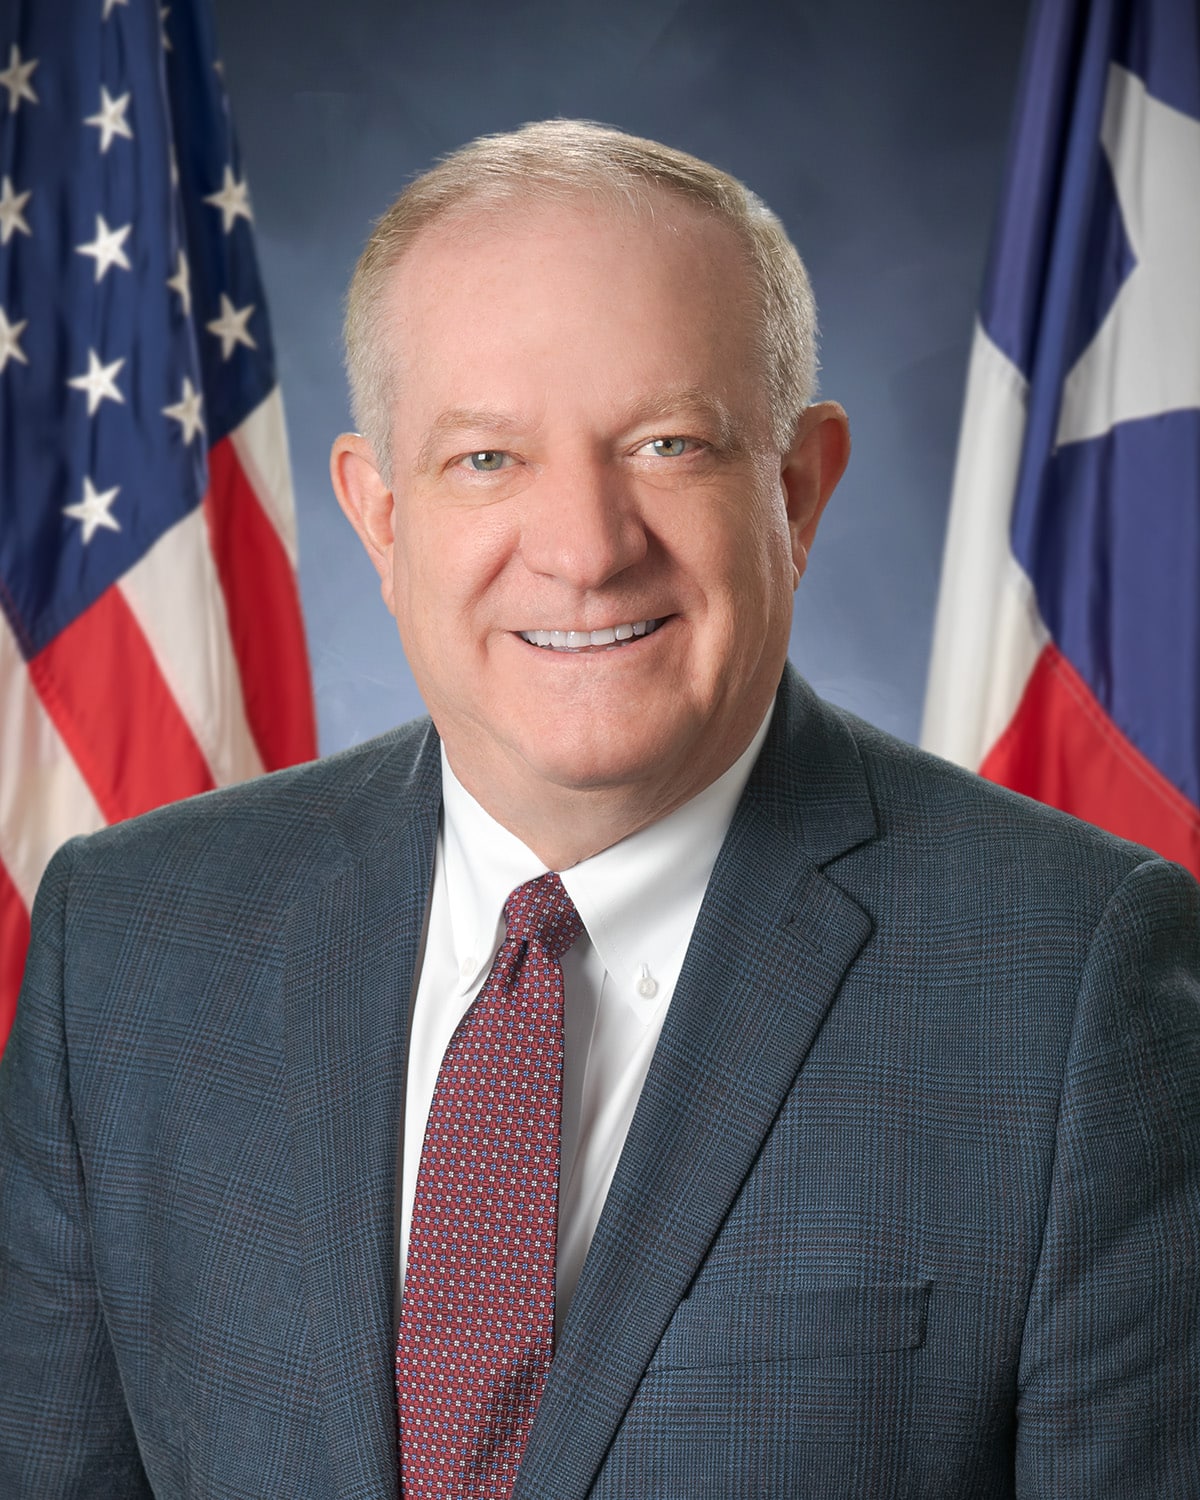 Mayor Phil Johnson